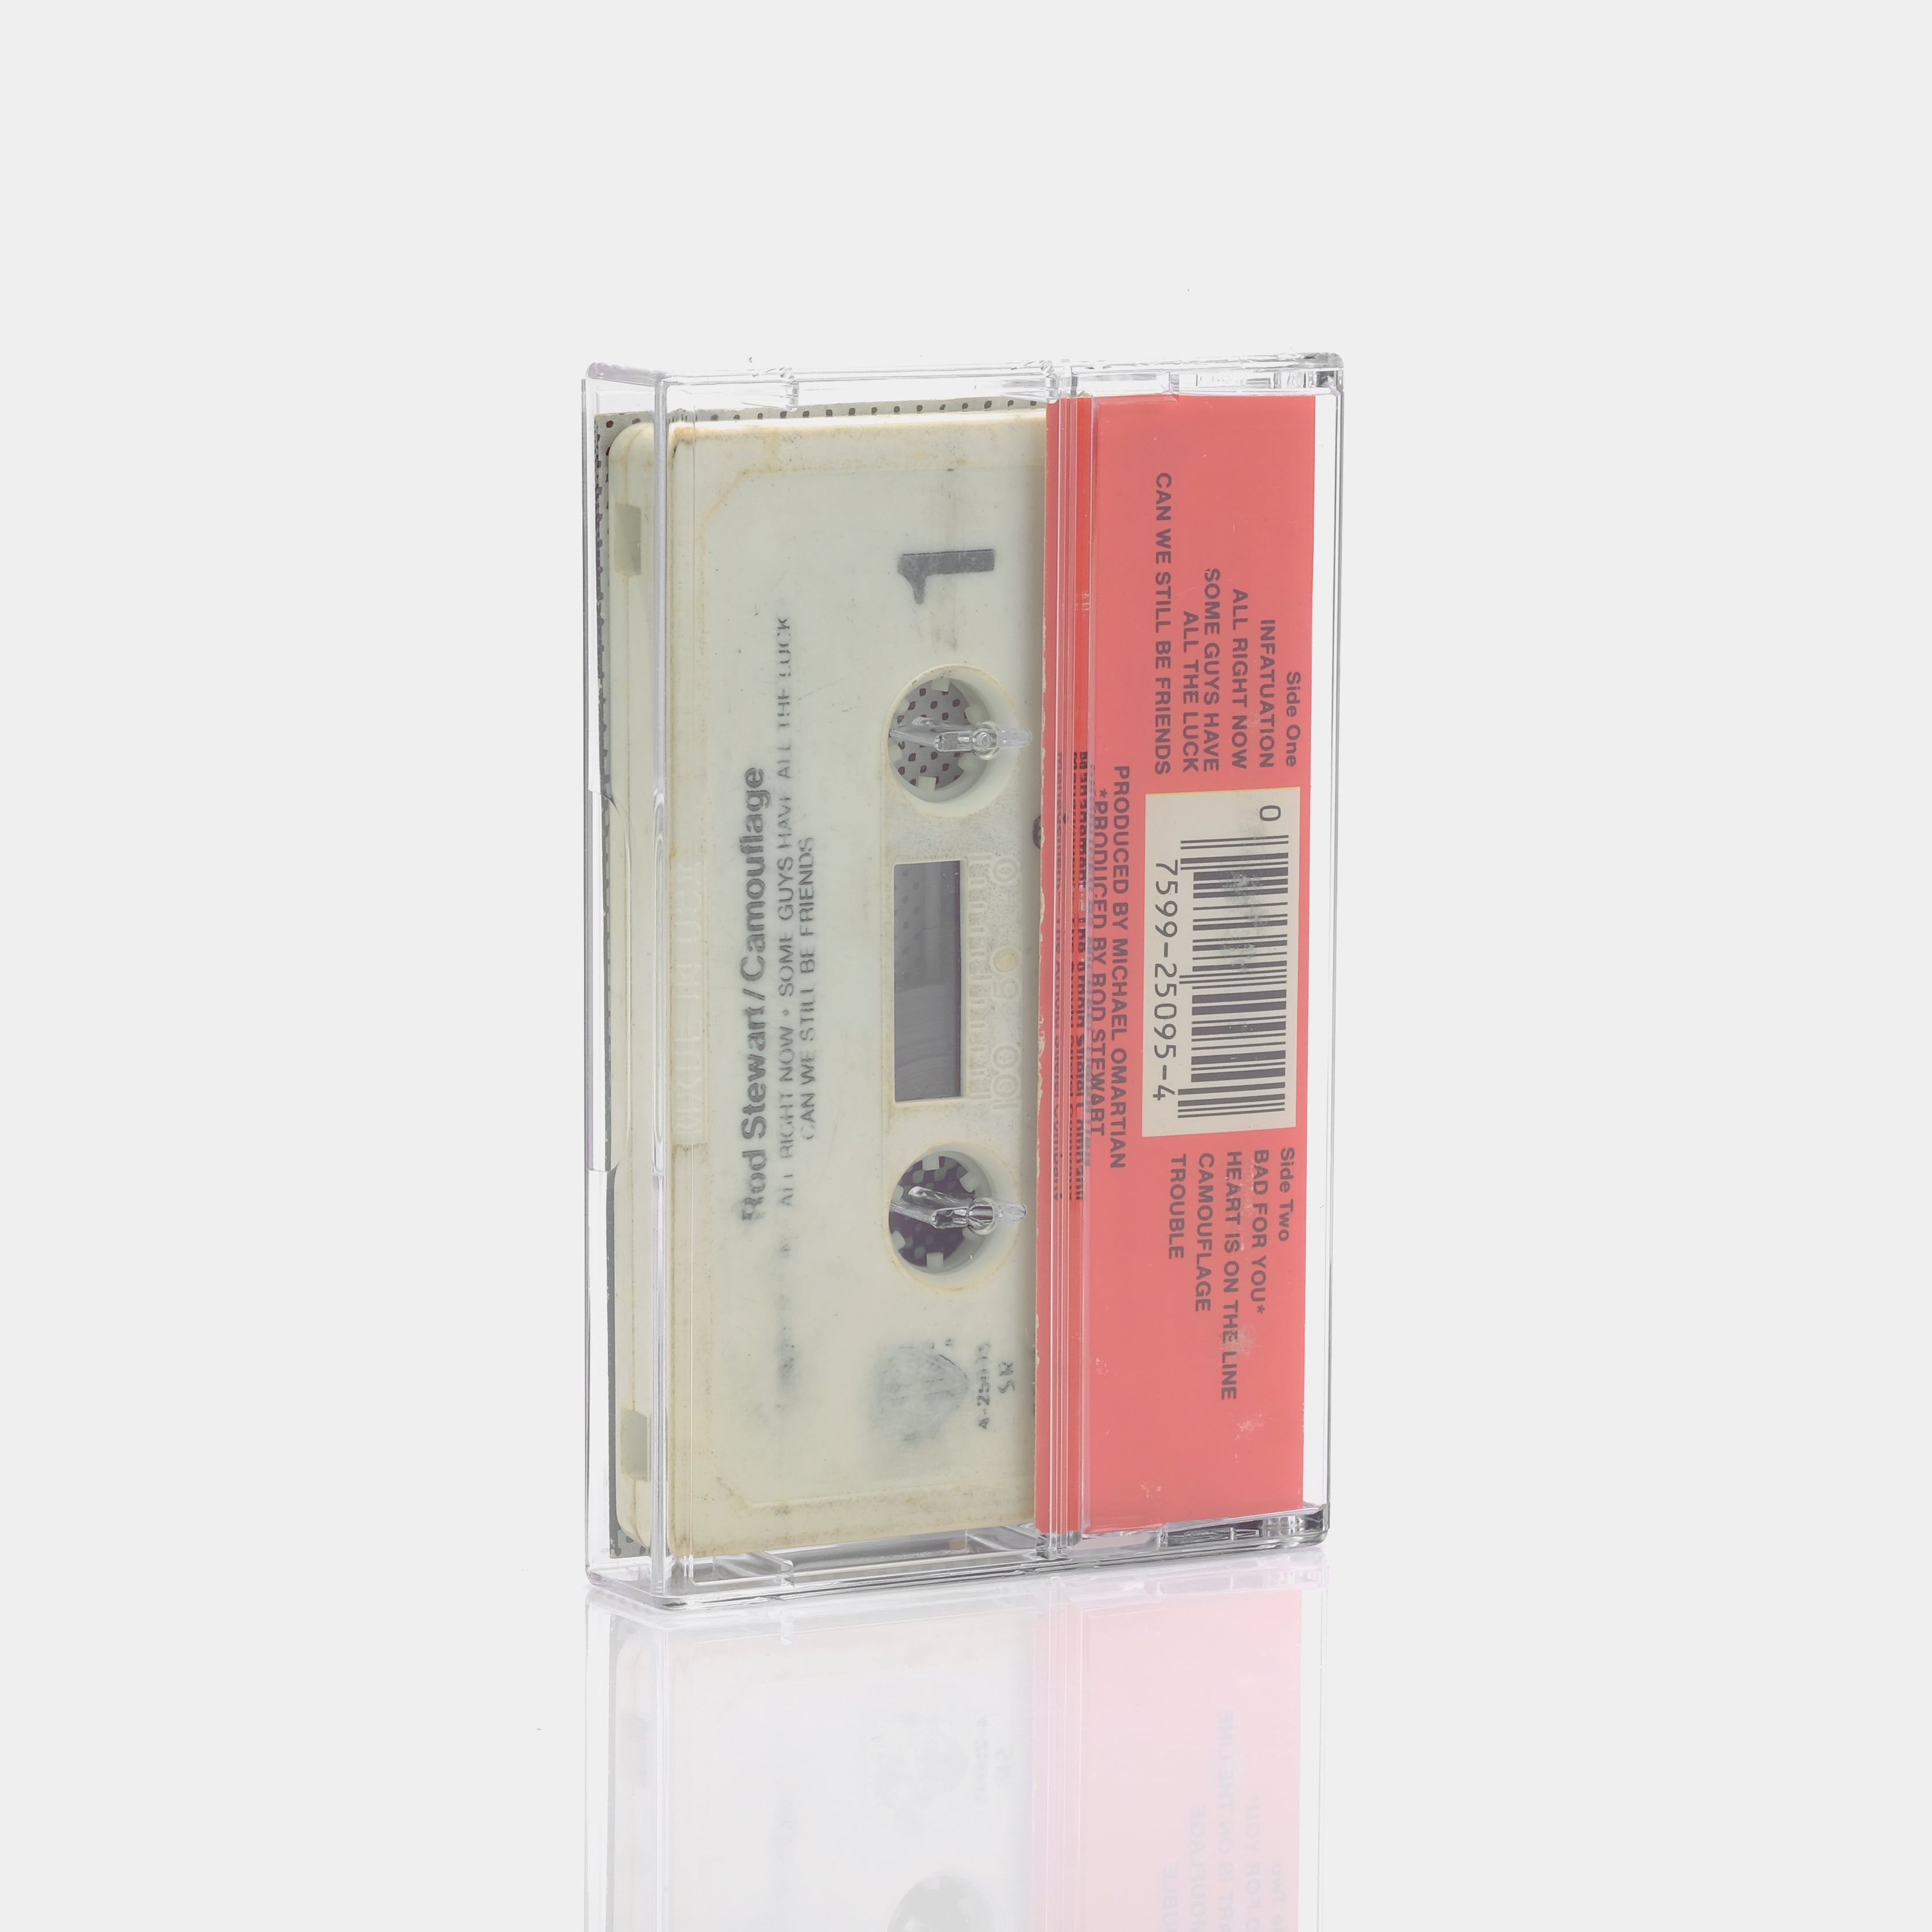 Rod Stewart - Camouflage Cassette Tape